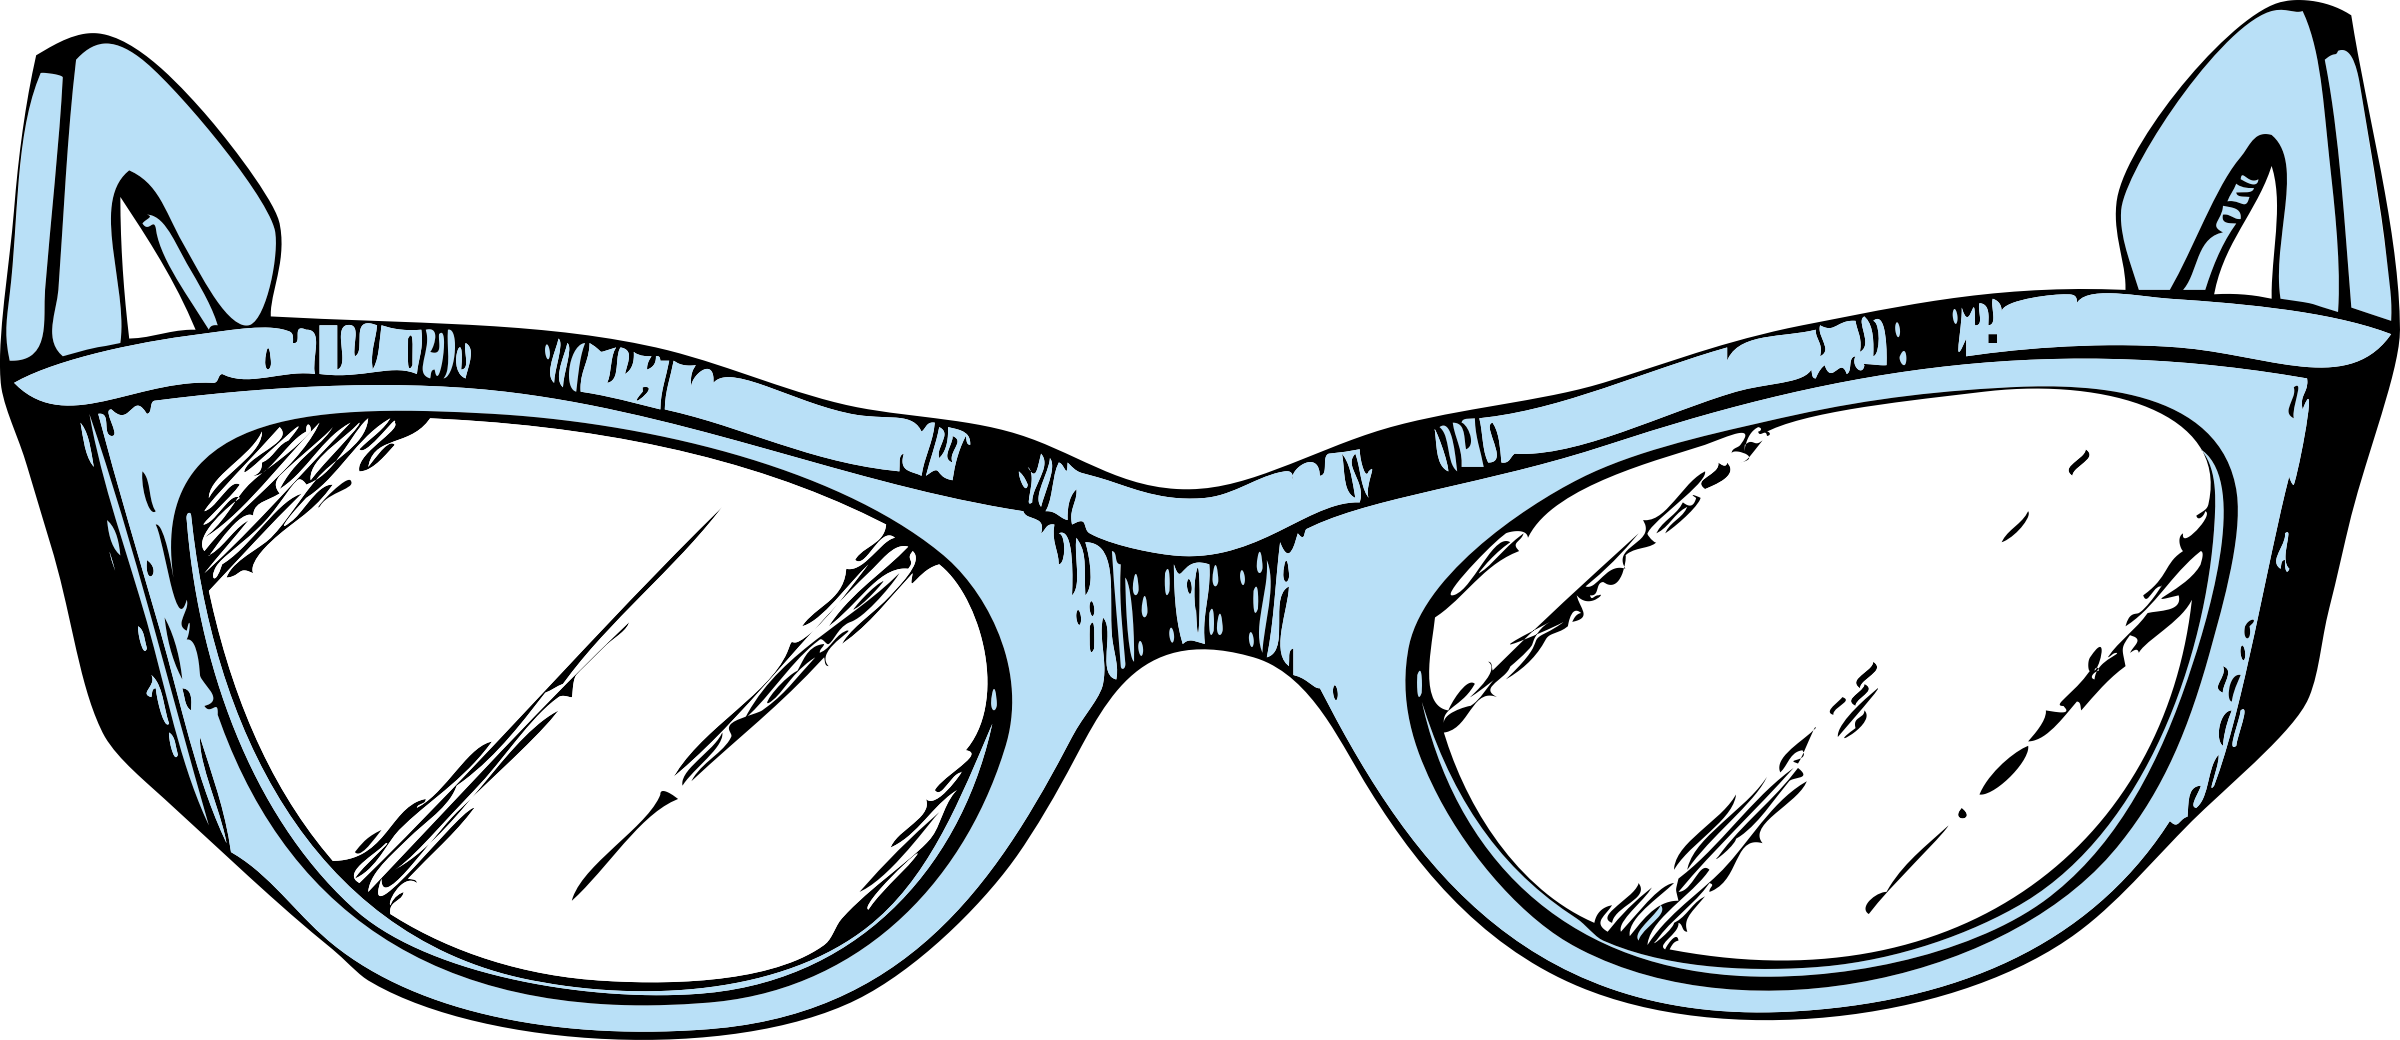 clipart sunglasses clubmaster